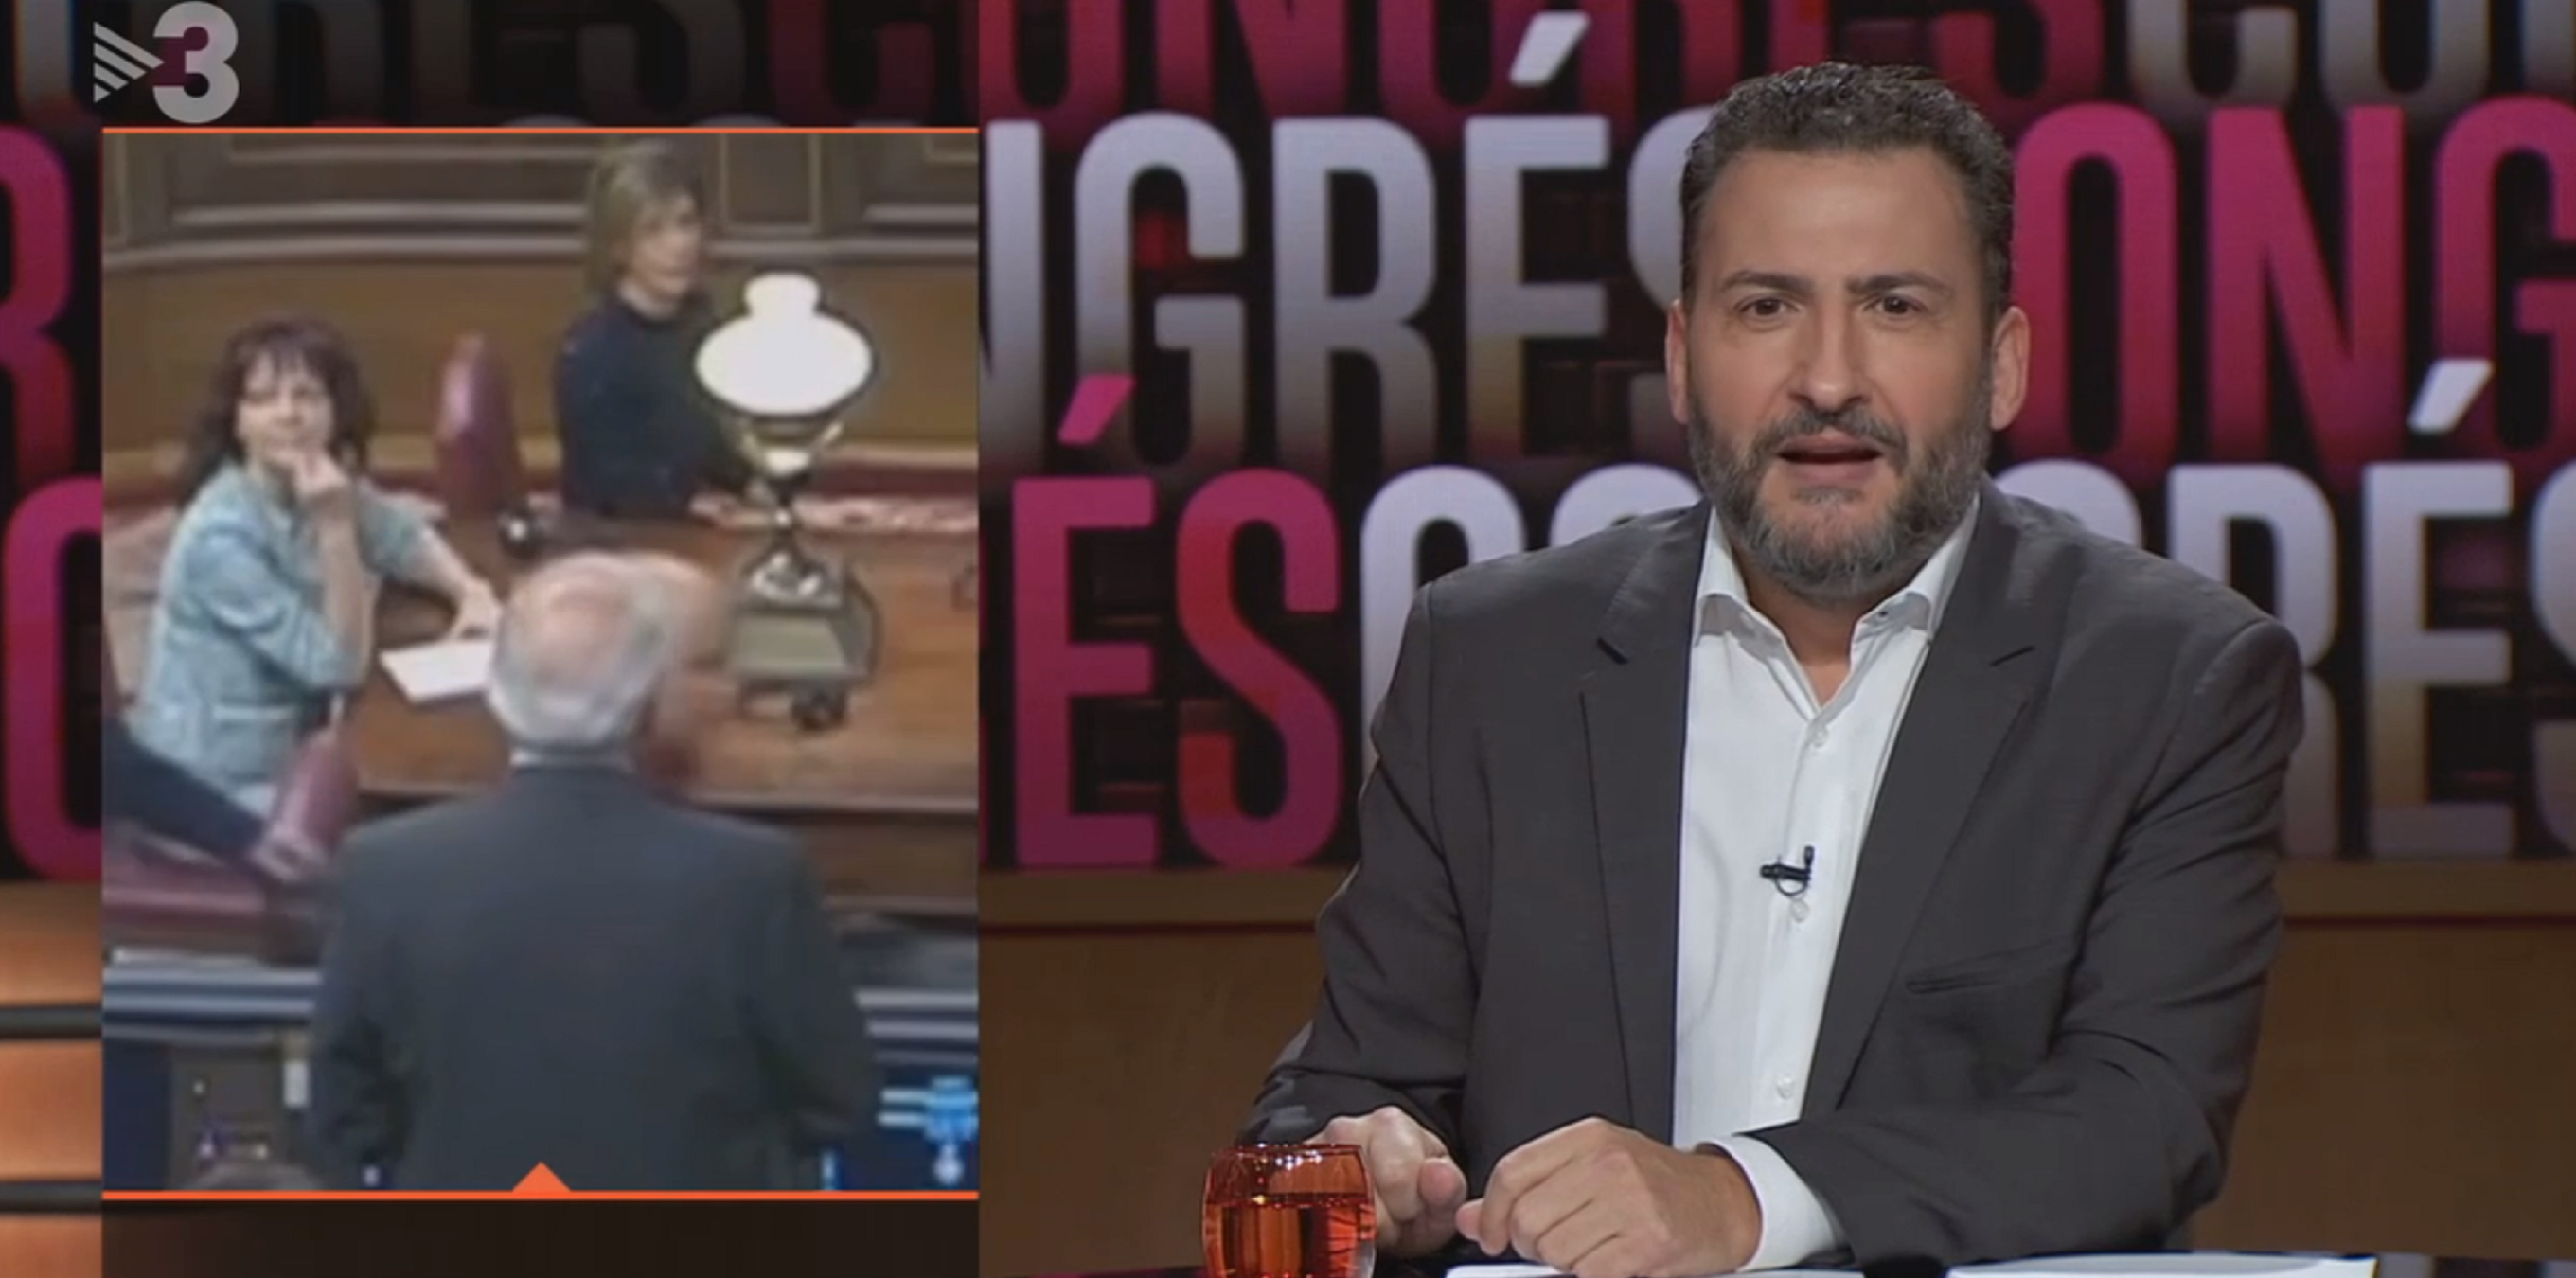 Alfonso Rojo acusa a TV3 de bromear con que Borrell es gay por este gag